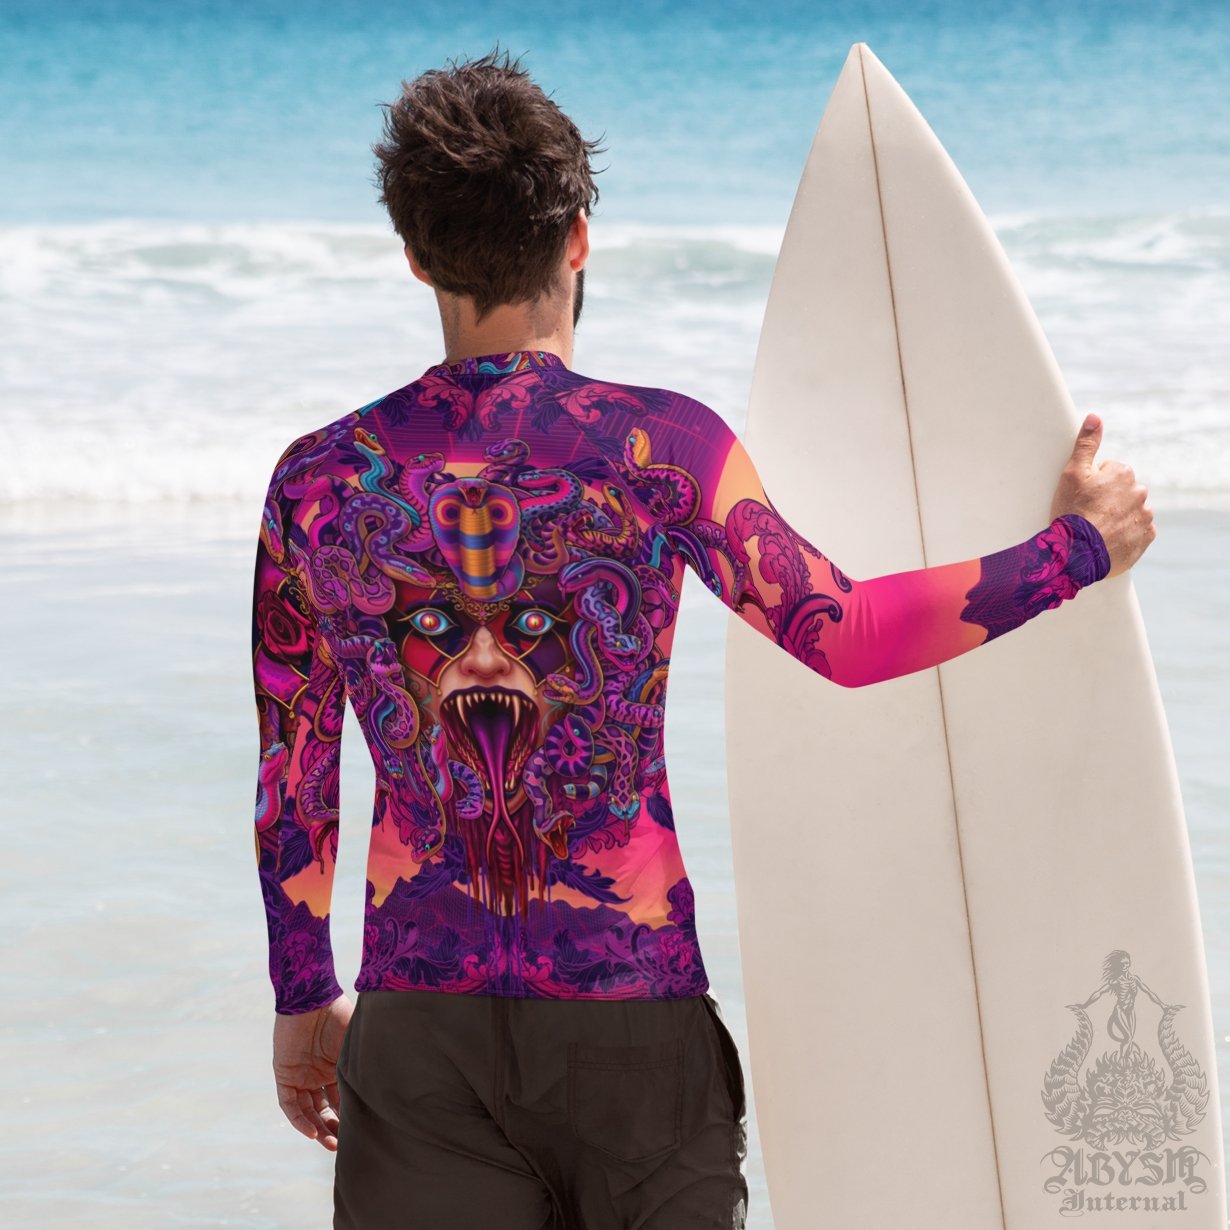 Cool Men's Rash Guard, Long Sleeve spandex shirt for surfing, swimwear top for water sports, Fantasy Art - Vaporwave Medusa - Abysm Internal